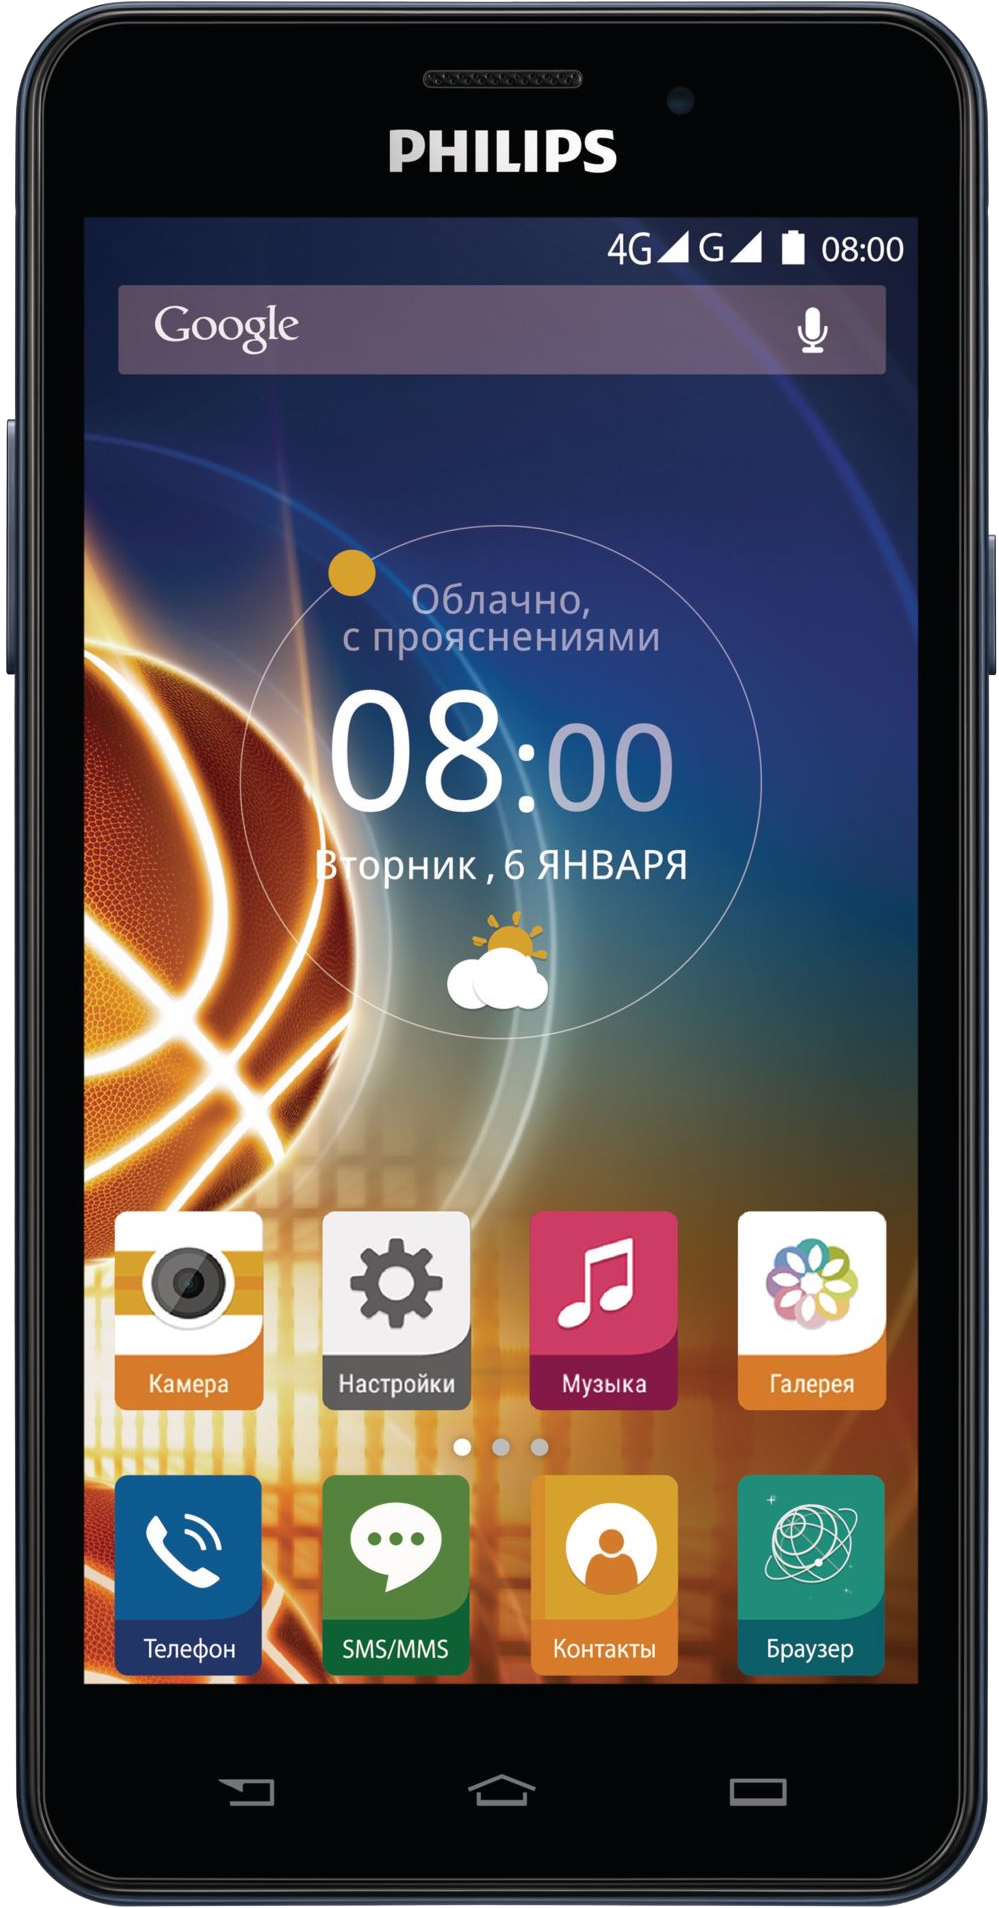 Филипс v. Смартфон Philips Xenium v526 LTE. Philips Xenium смартфон сенсорный. Сенсорный телефон Филипс Xenium v526. Philips Xenium Android 2 SIM.